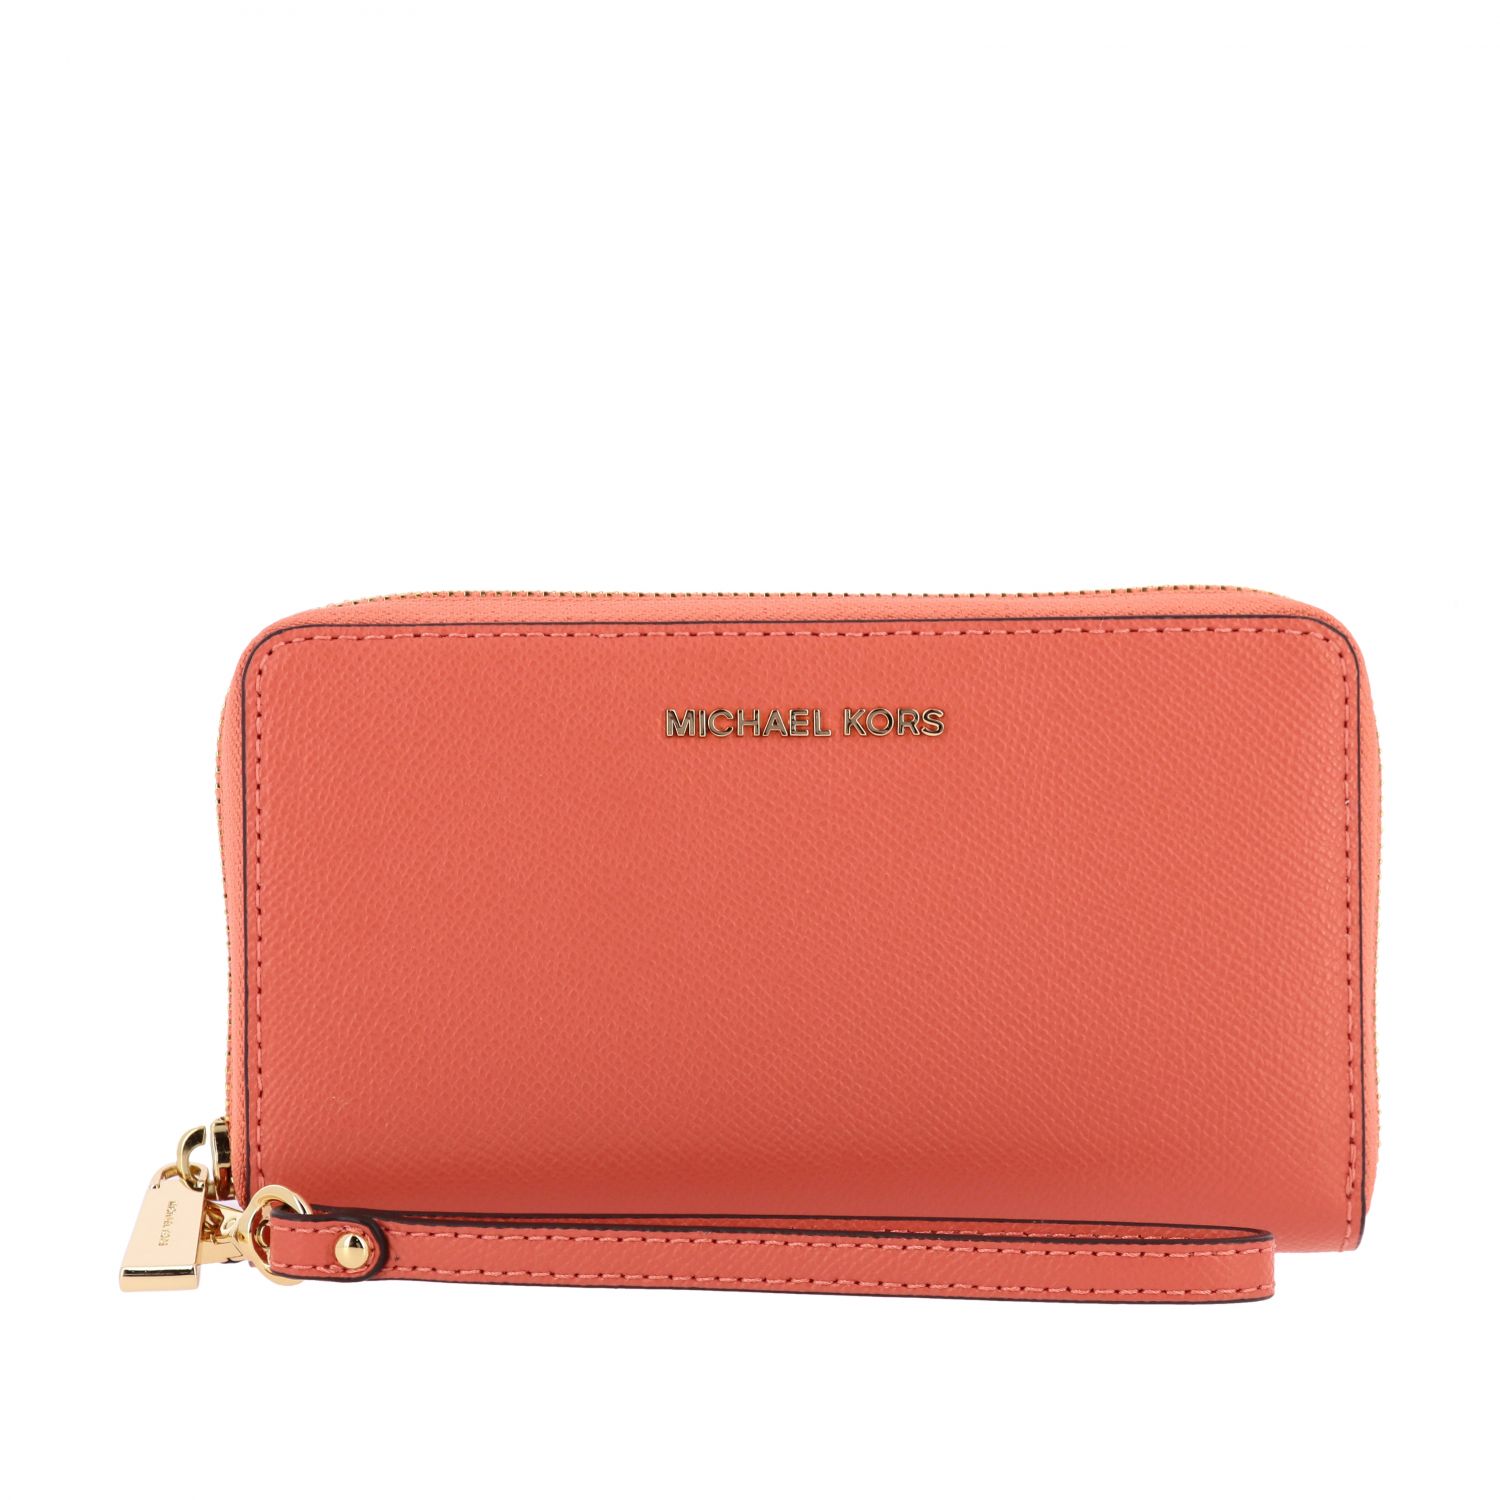 Michael Kors Outlet: wallet for women - Coral | Michael Kors wallet ...